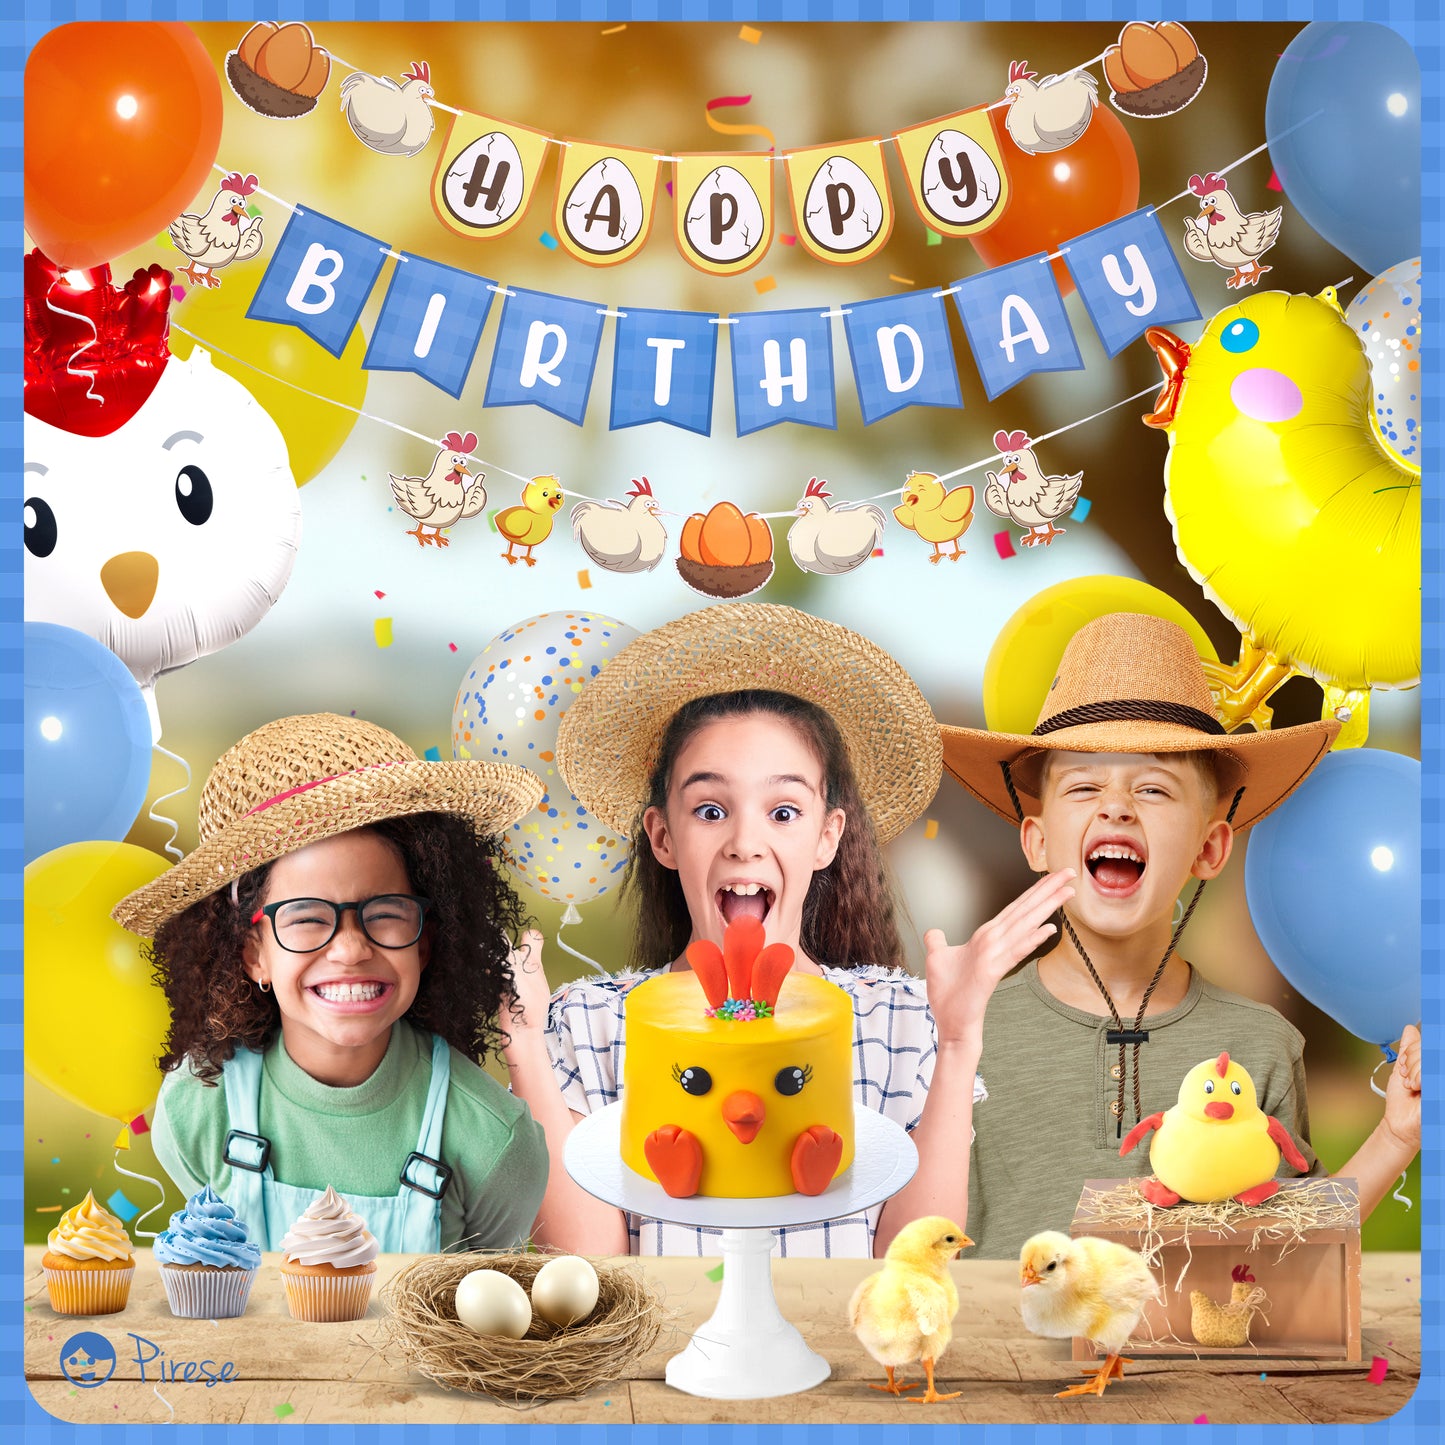 Pirese Chicken Birthday Decorations, Chicken Party Decorations